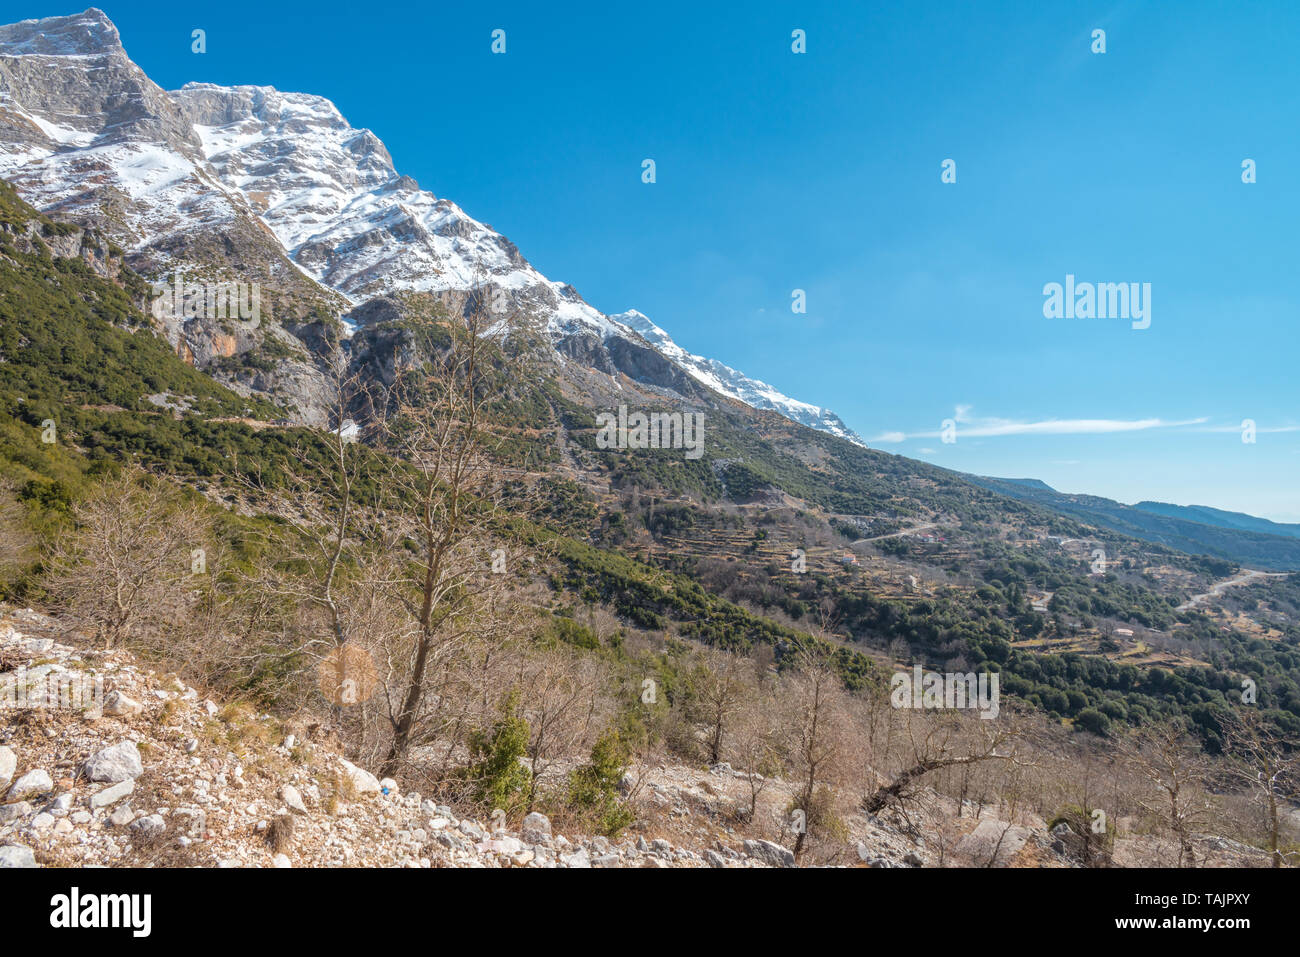 High mountains in the Greek Alps, Kataraktis area of Greece. Snowcapped mountain range in blue, cloudless sky. Stock Photo